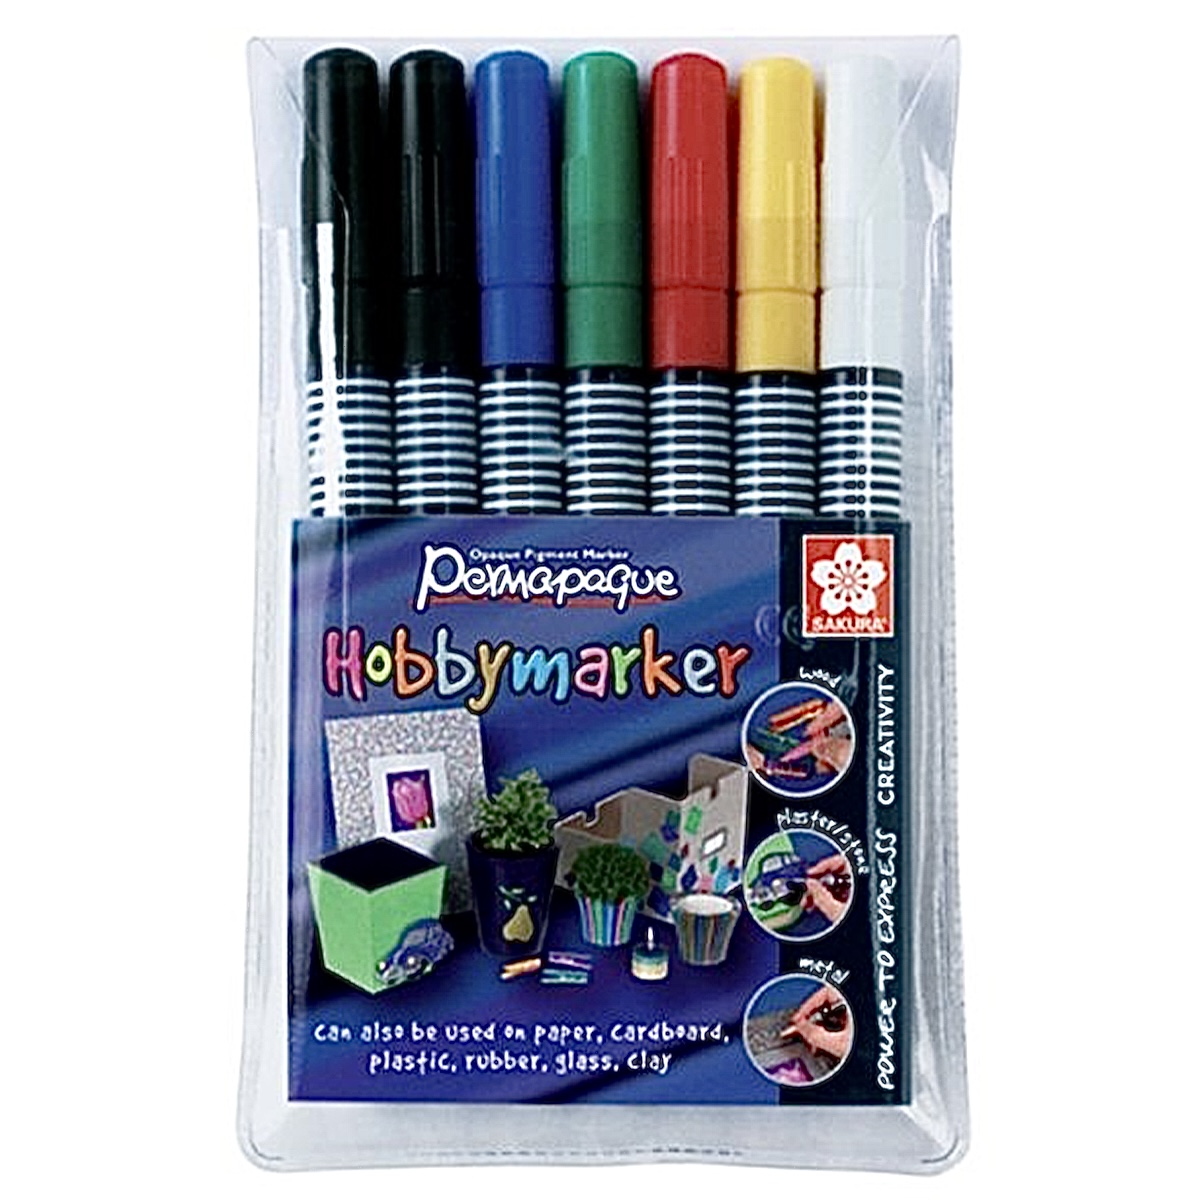 Permapaque Hobbymarker 7-set in the group Pens / Artist Pens / Illustration Markers at Pen Store (128943)